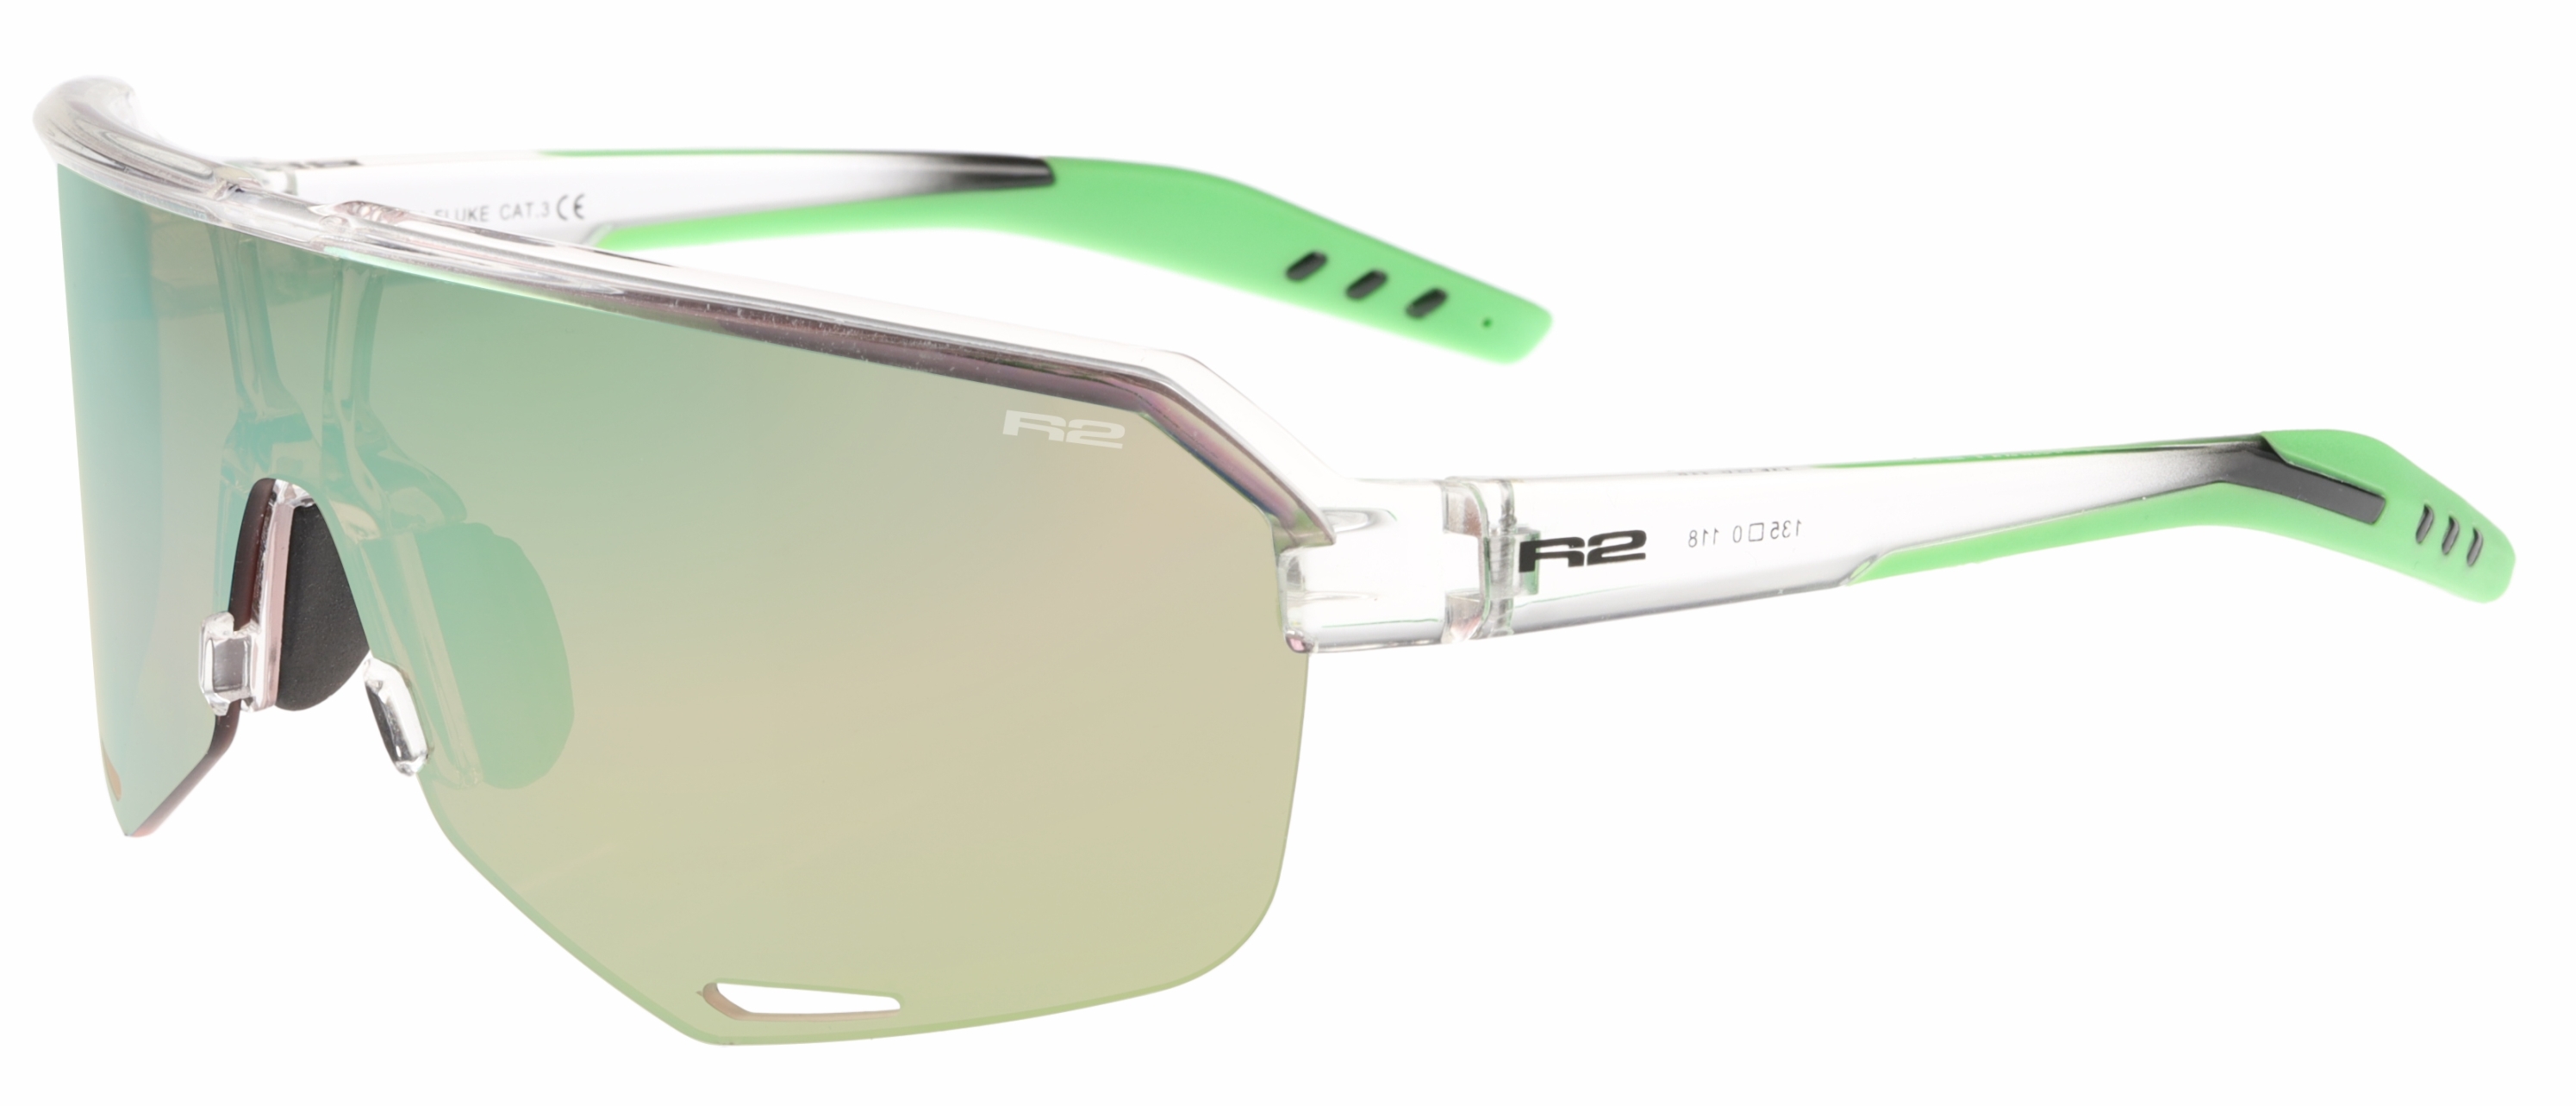 HD polarized sunglasses  R2 FLUKE AT100M standard